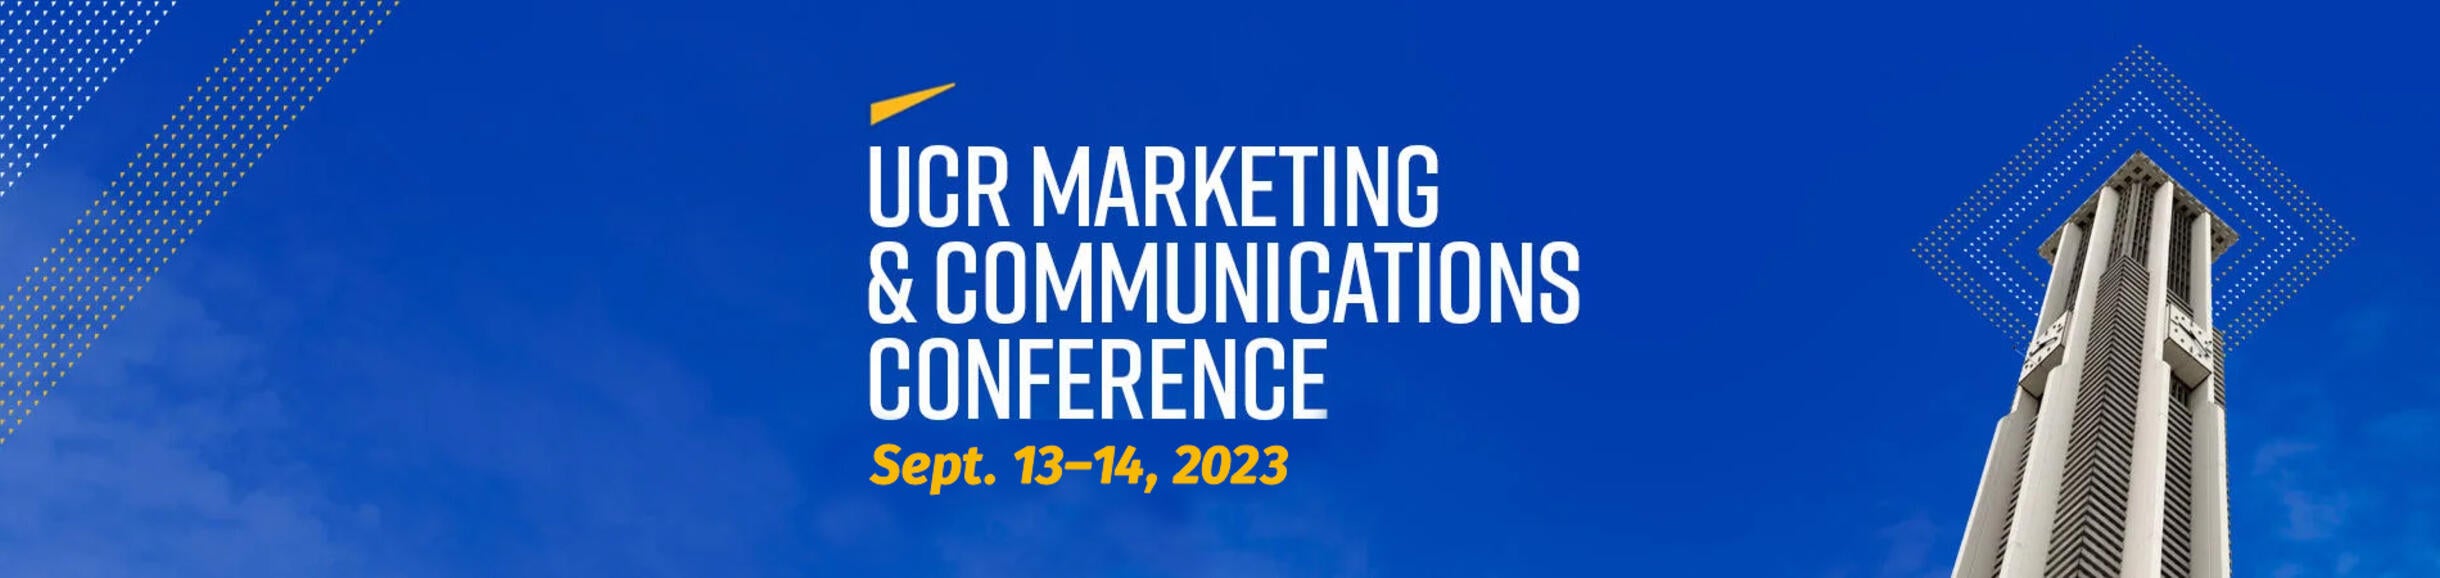 UCR Marketing & Communications Conference, Sept. 13-14, 2023